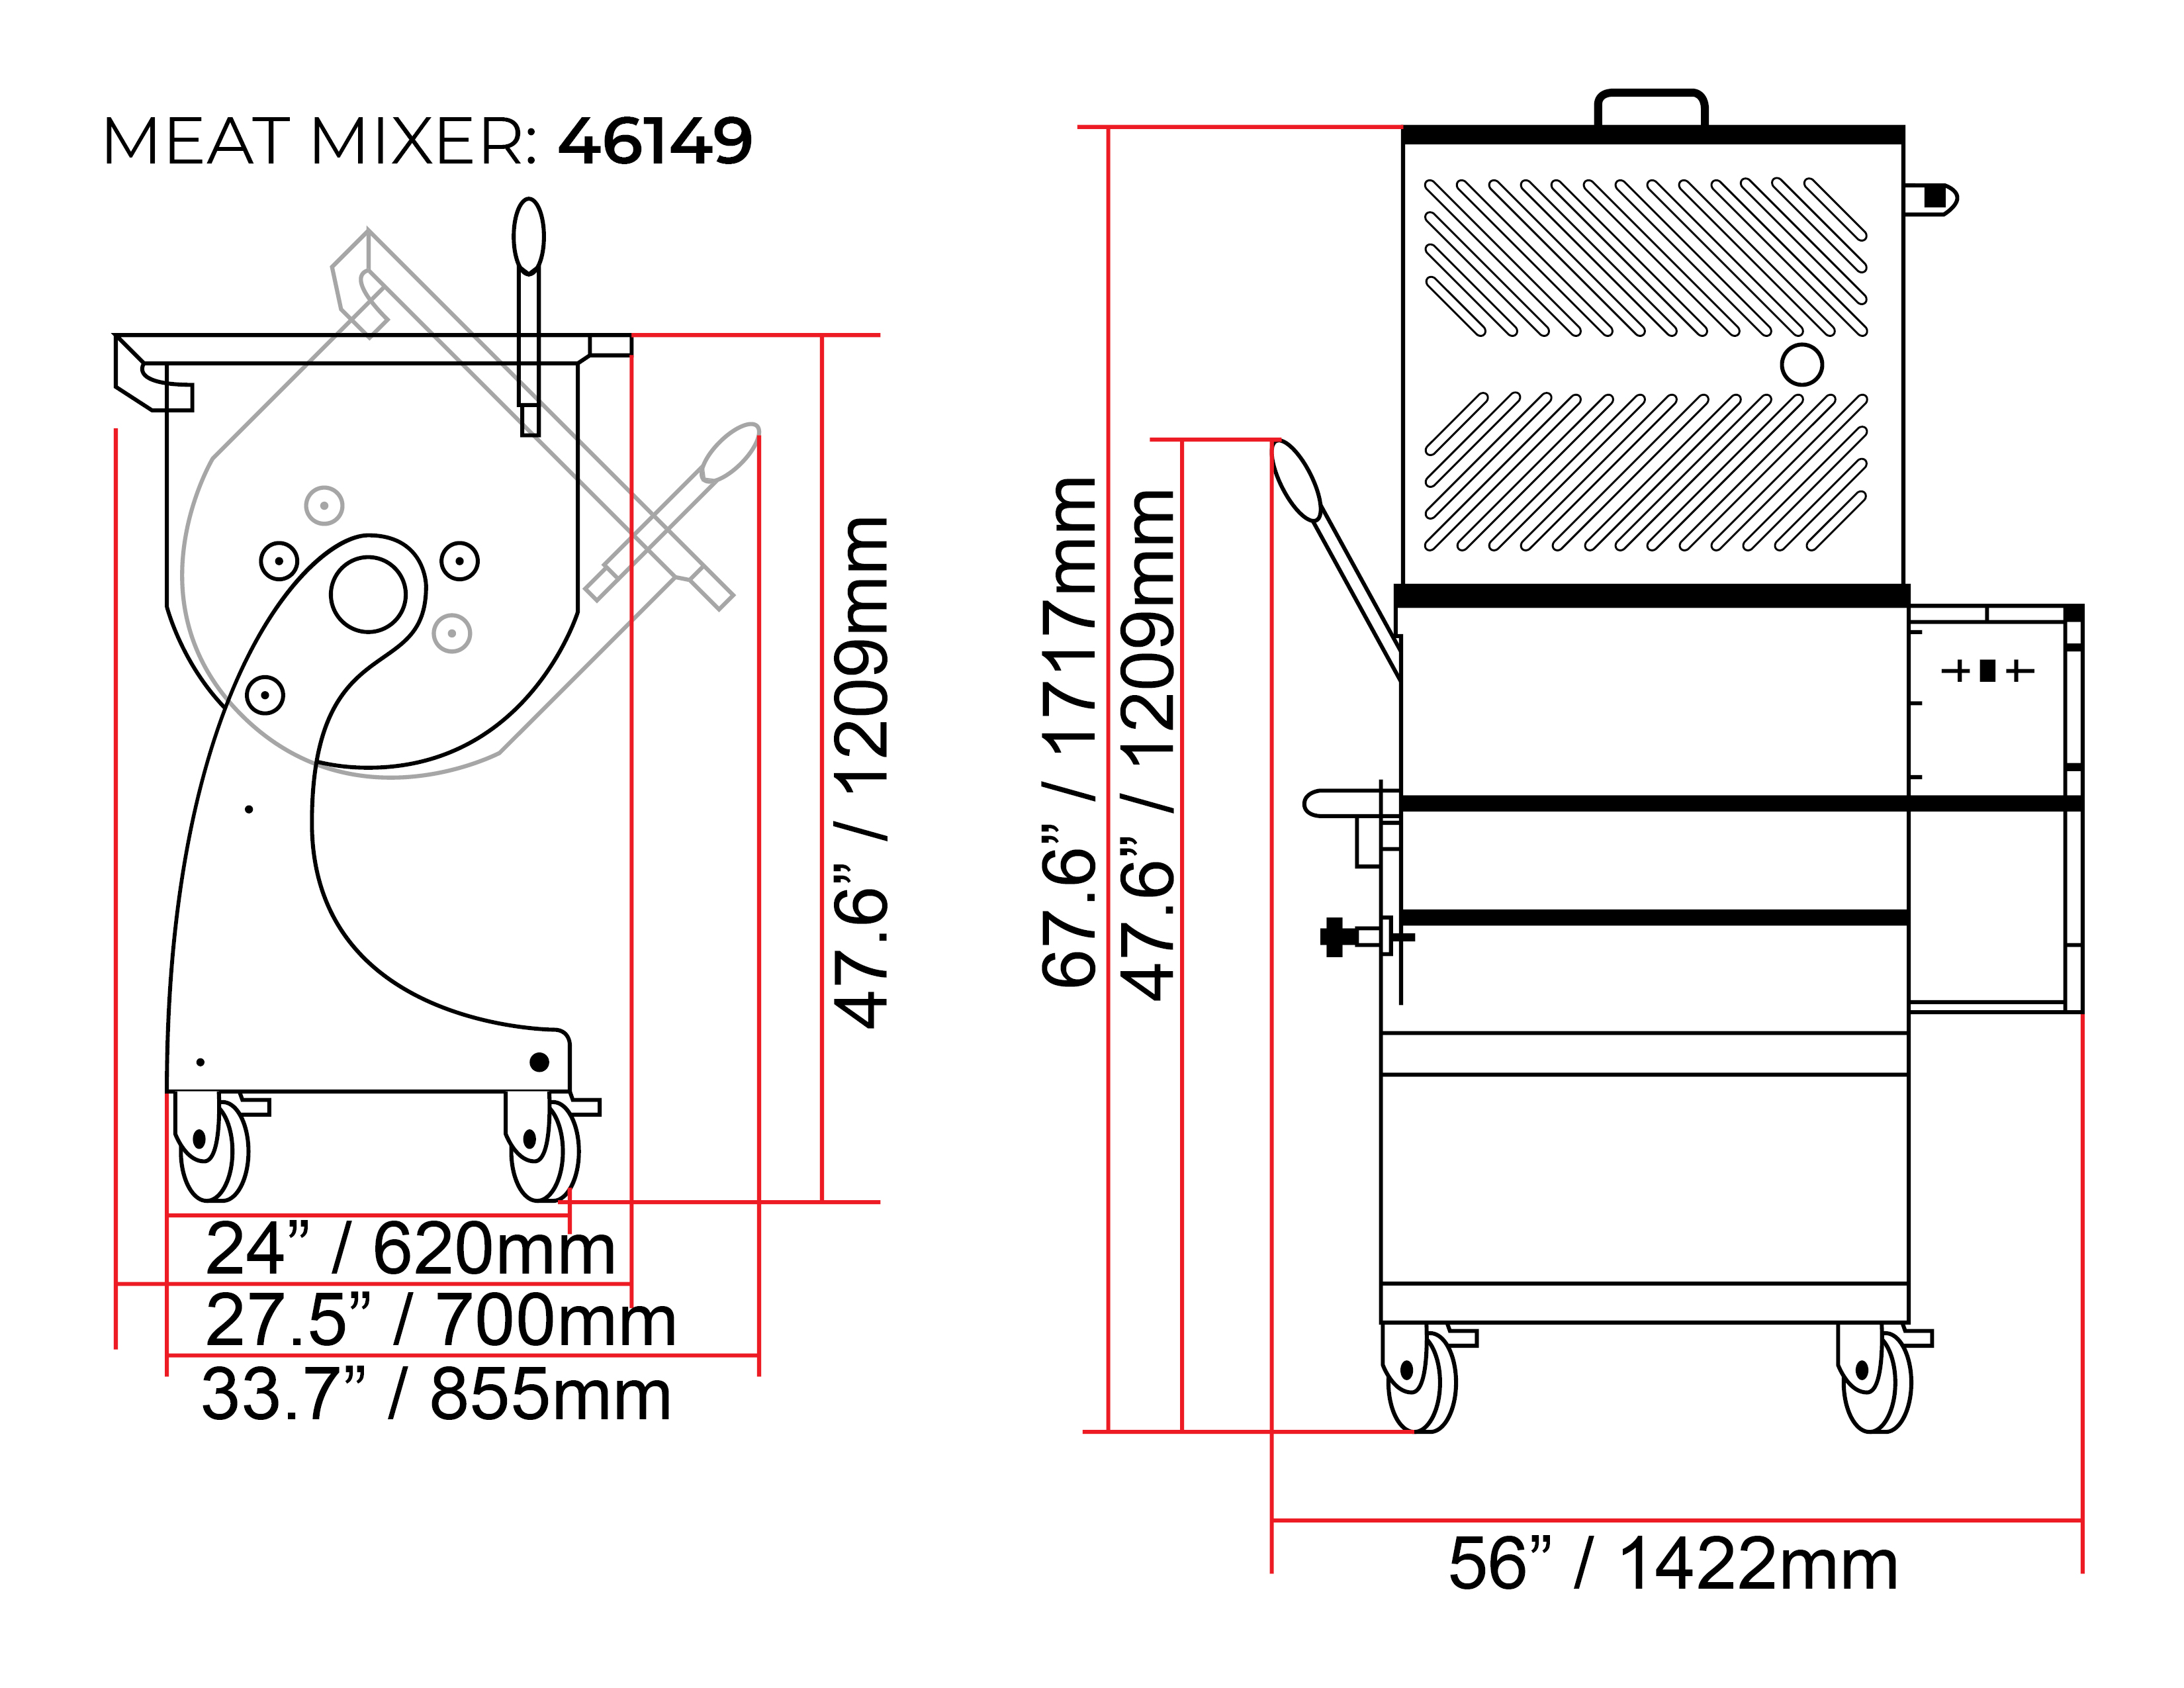 Omcan 37459 Heavy-Duty 66 lb. Electric Meat Mixer - 110V, 1 hp